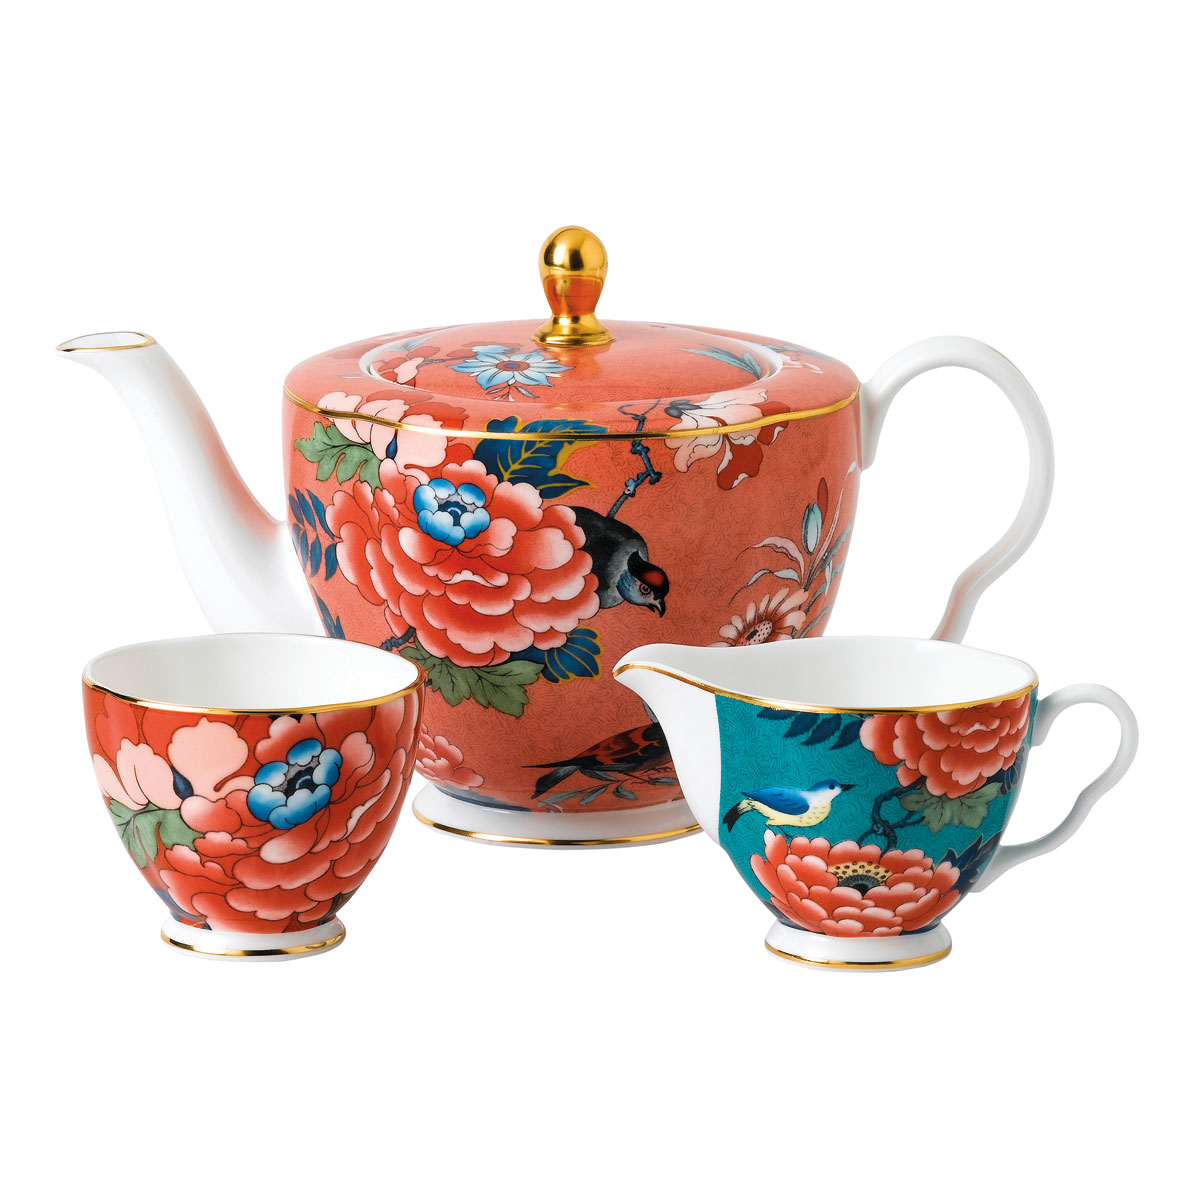 Wedgwood China Paeonia Blush 3 Piece Tea Set, Teapot, Sugar and Creamer